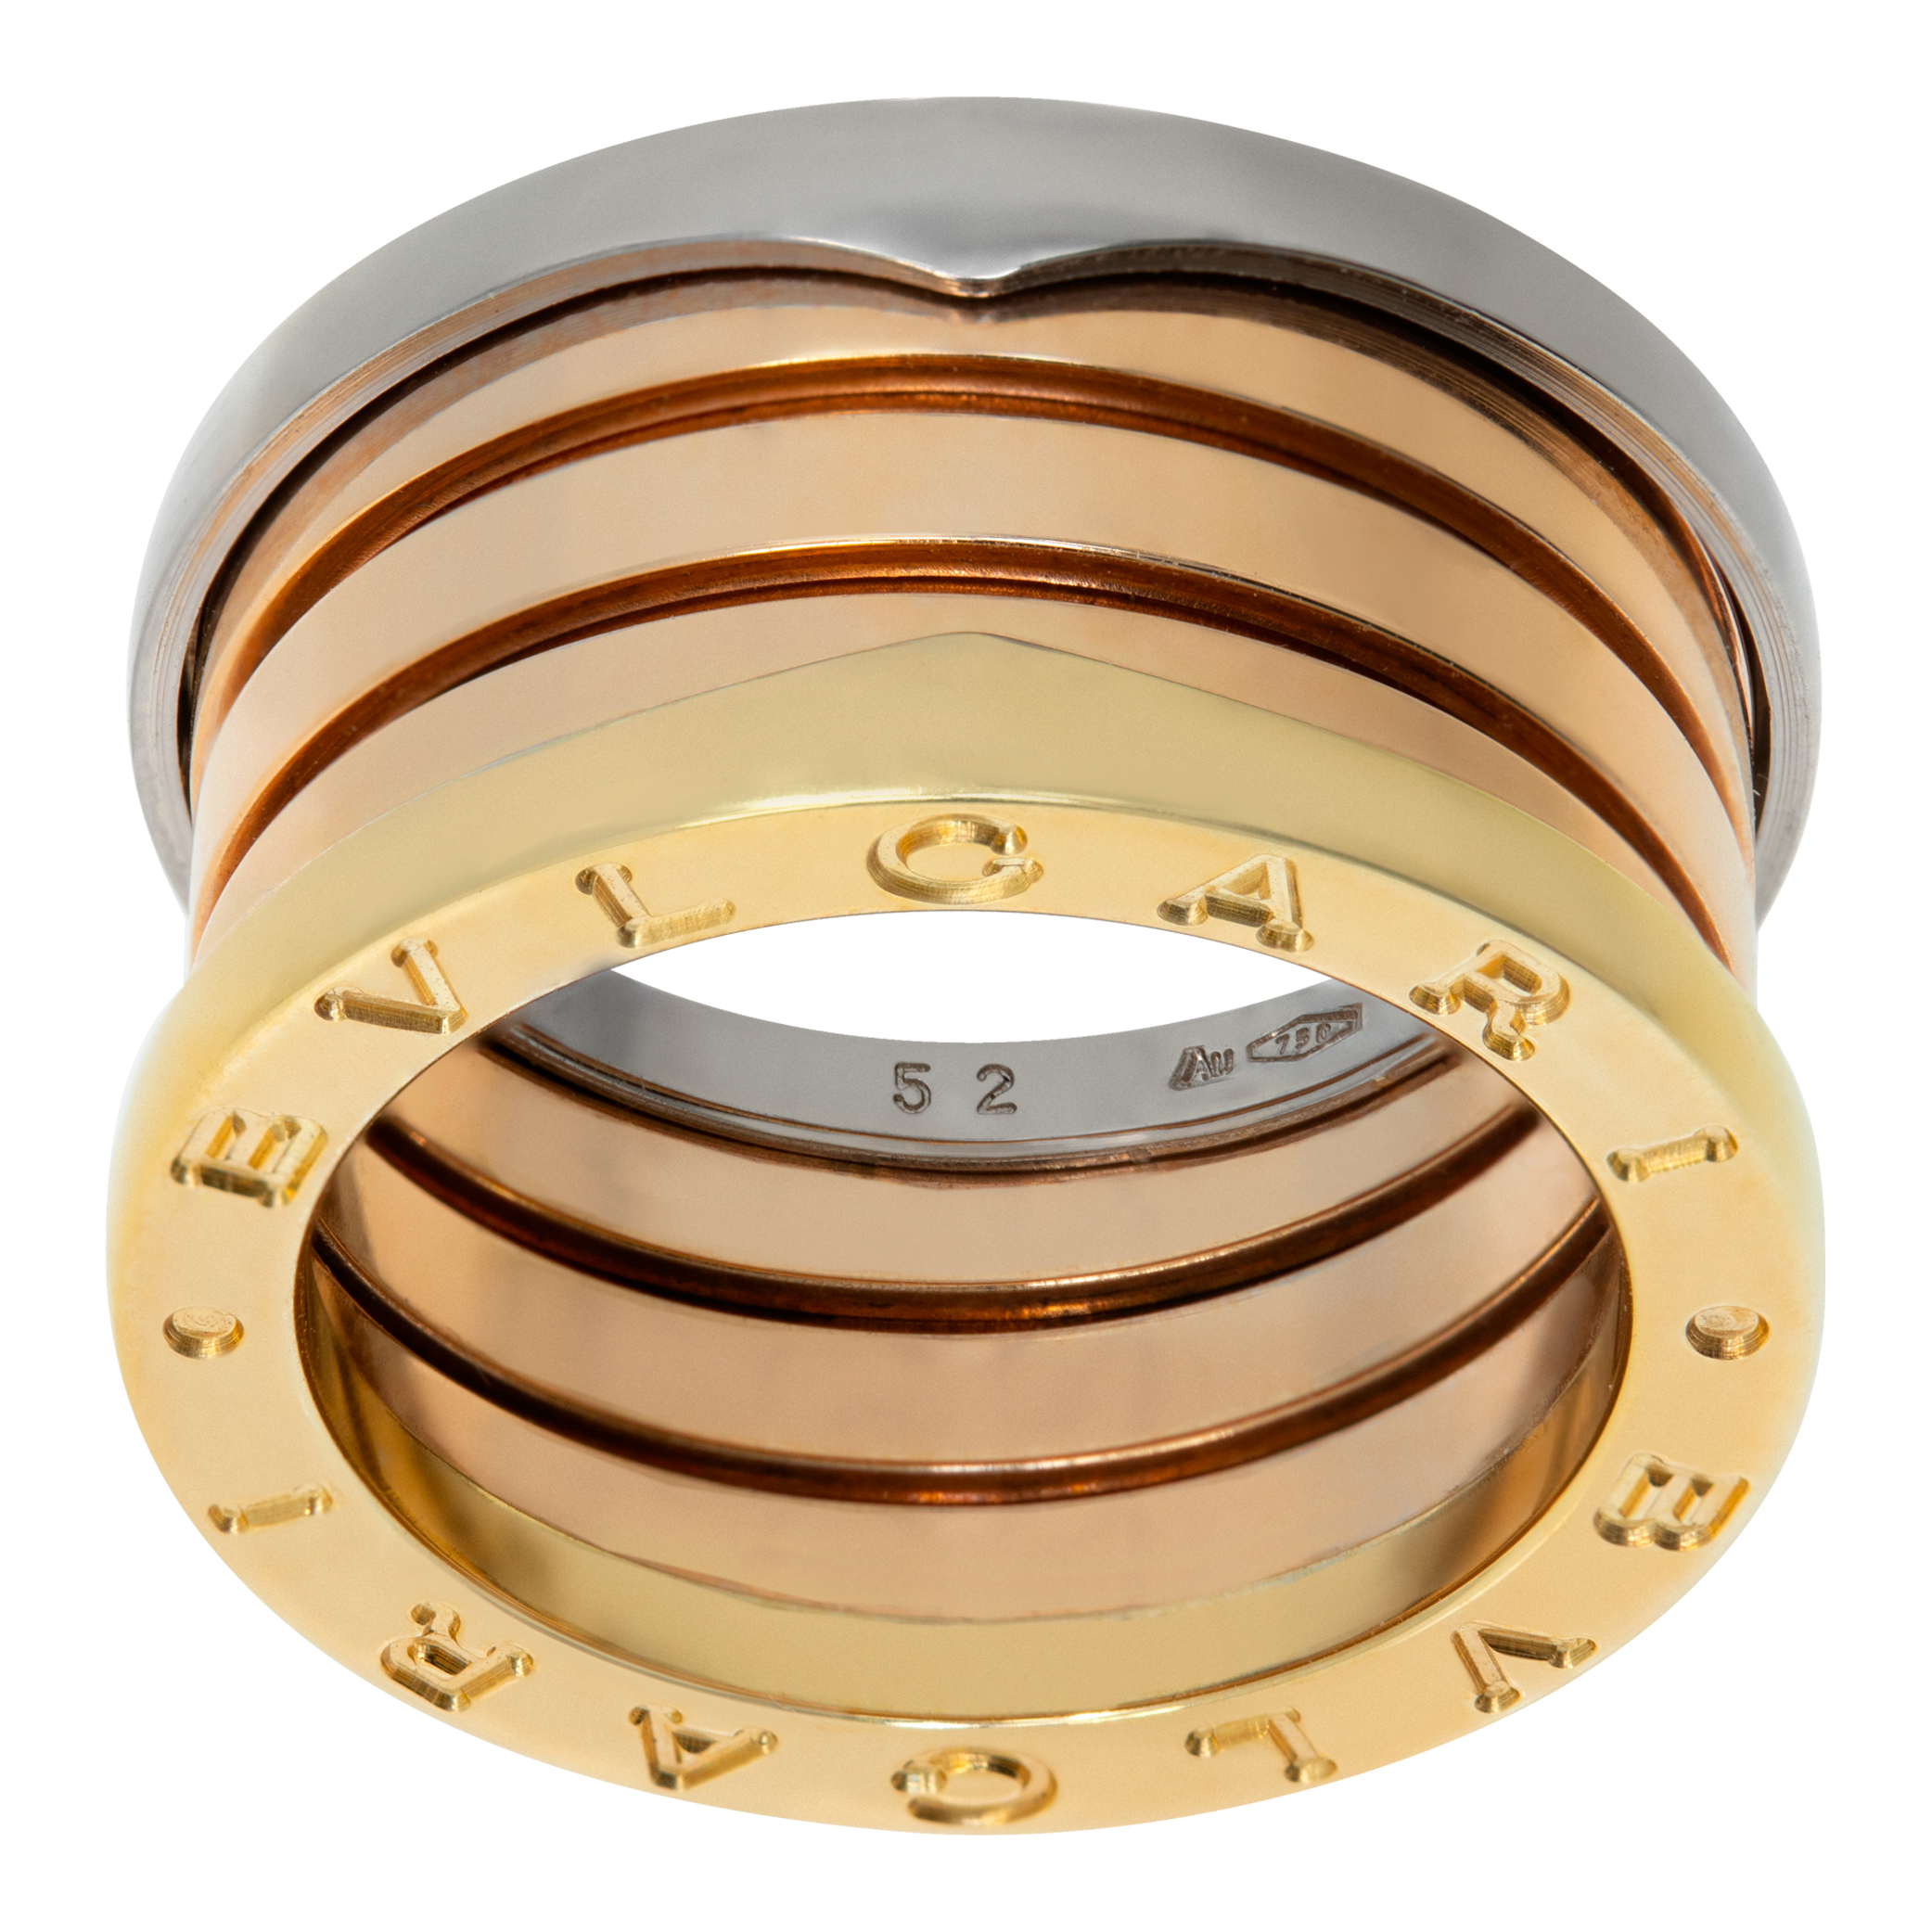 Bvlgari B. Zero 1 tricolor ring in 18k size 52 (Default)